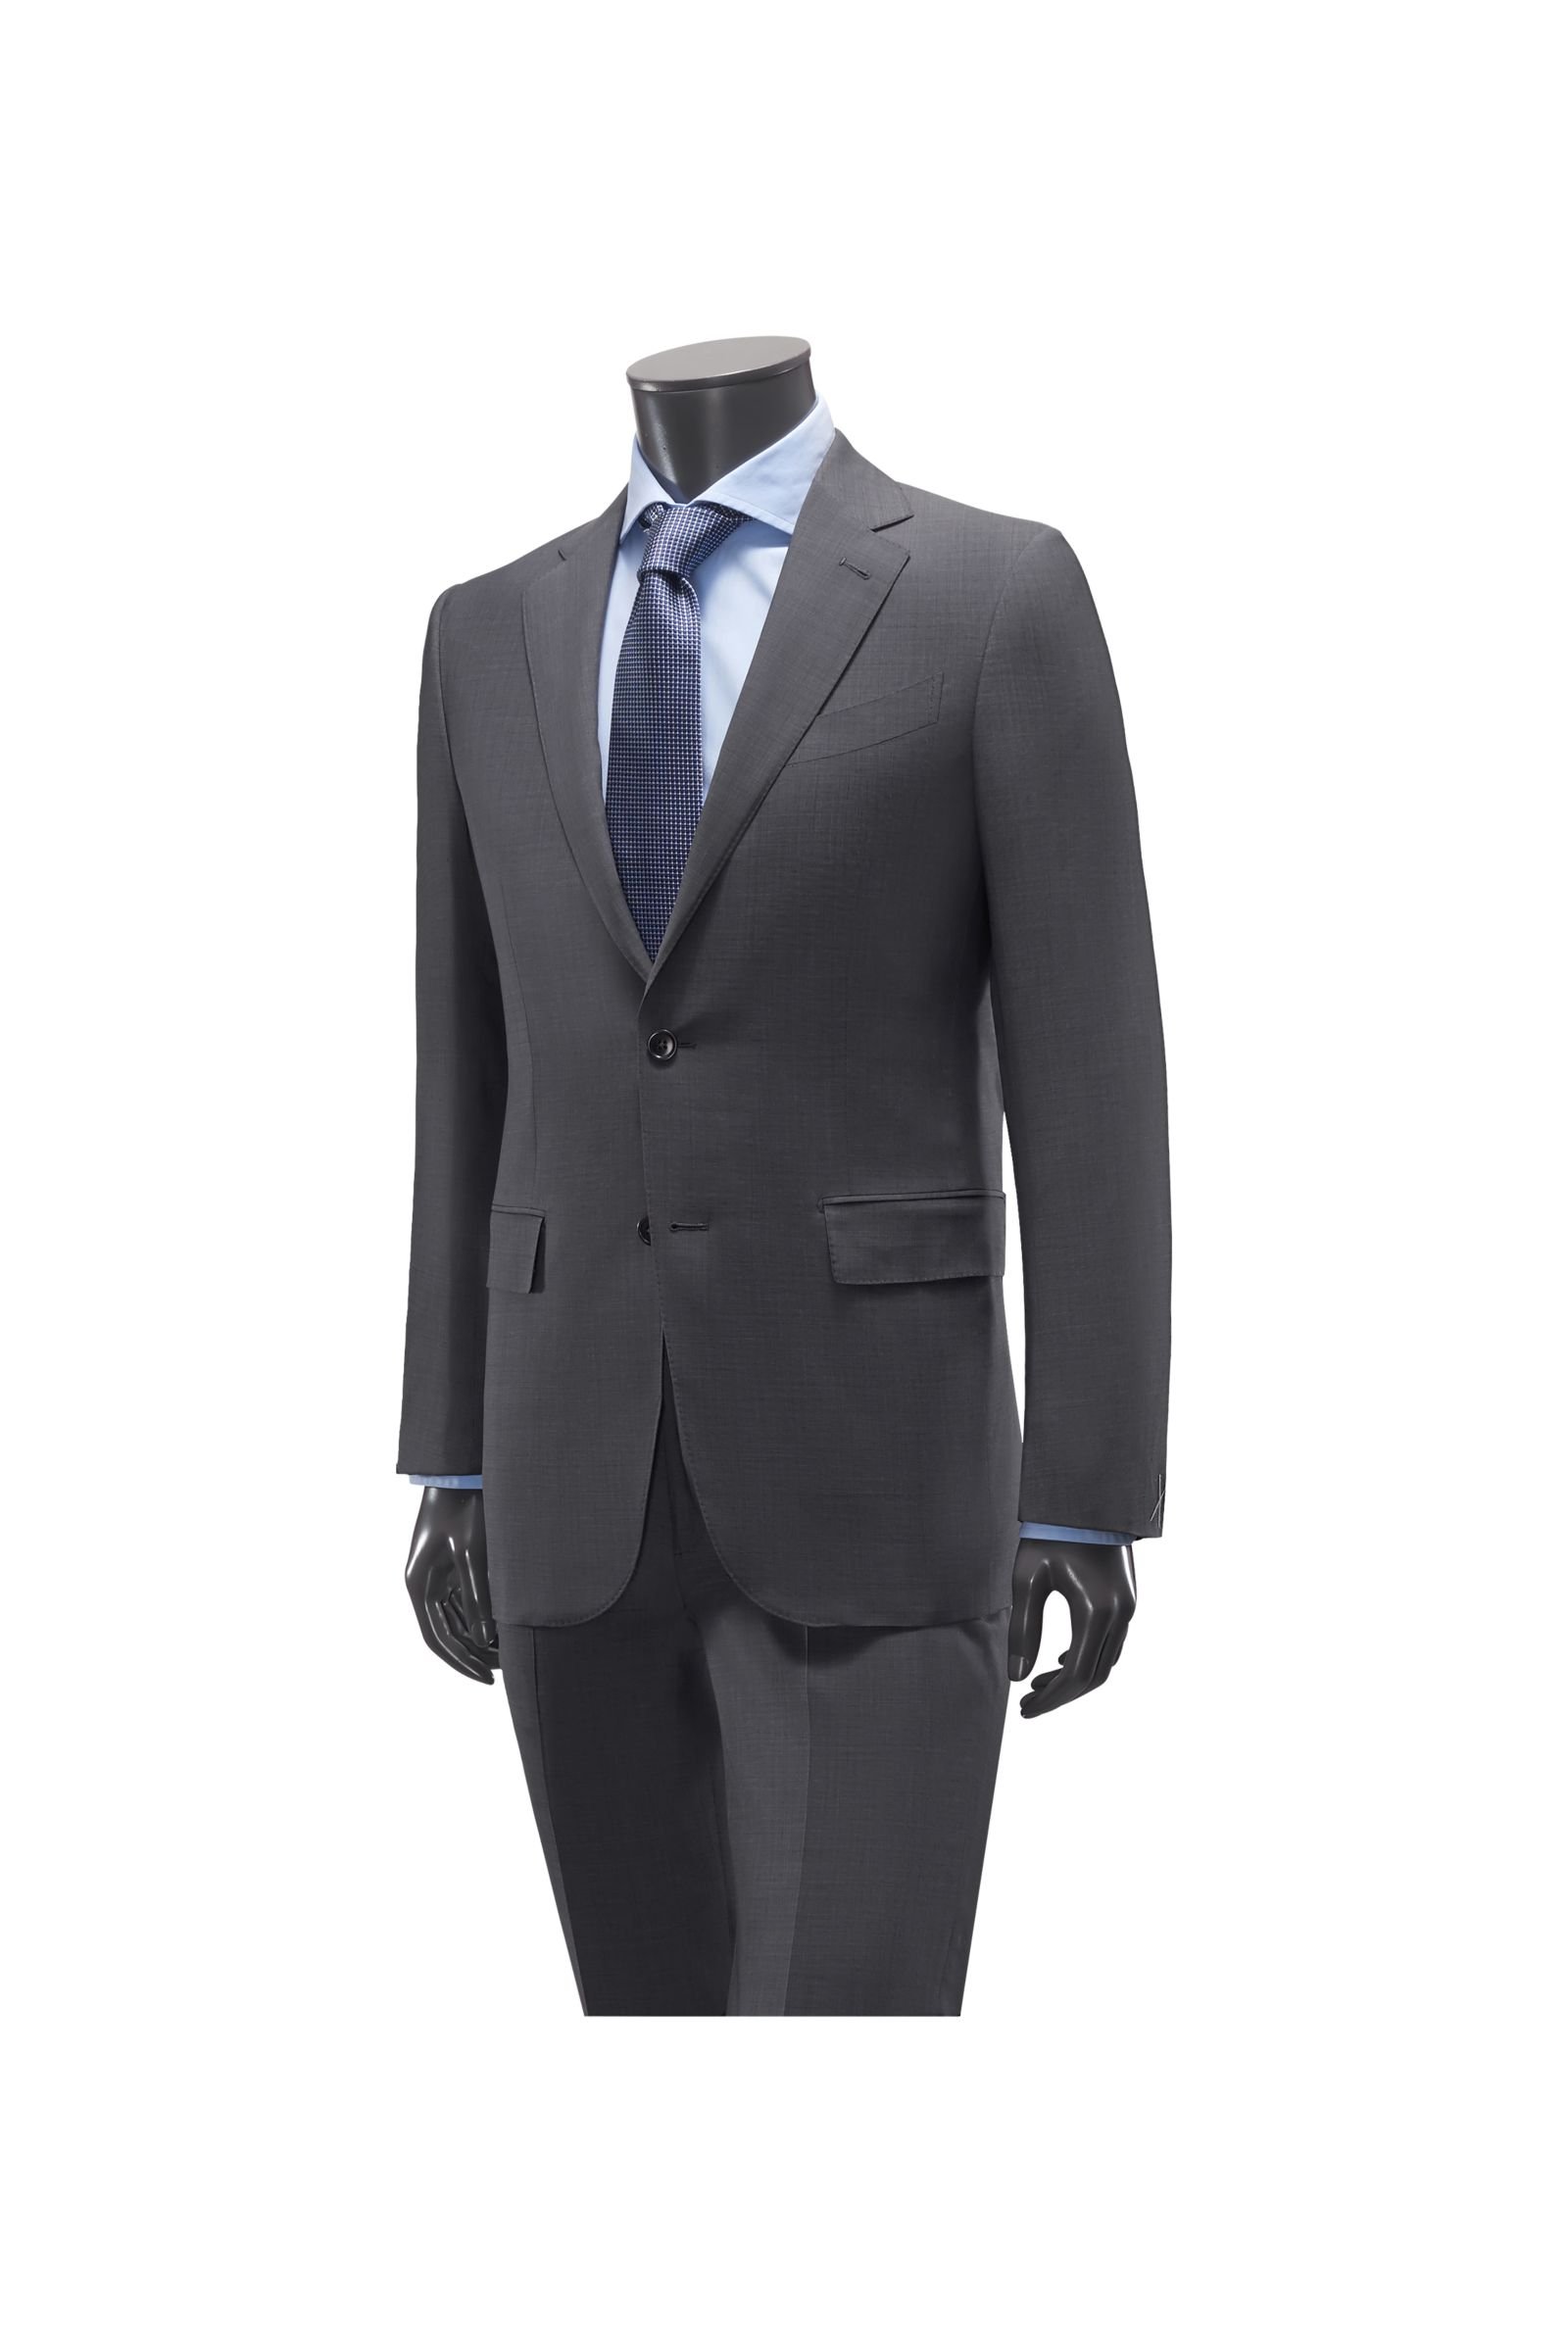 Suit 'Milano regular fit' grey